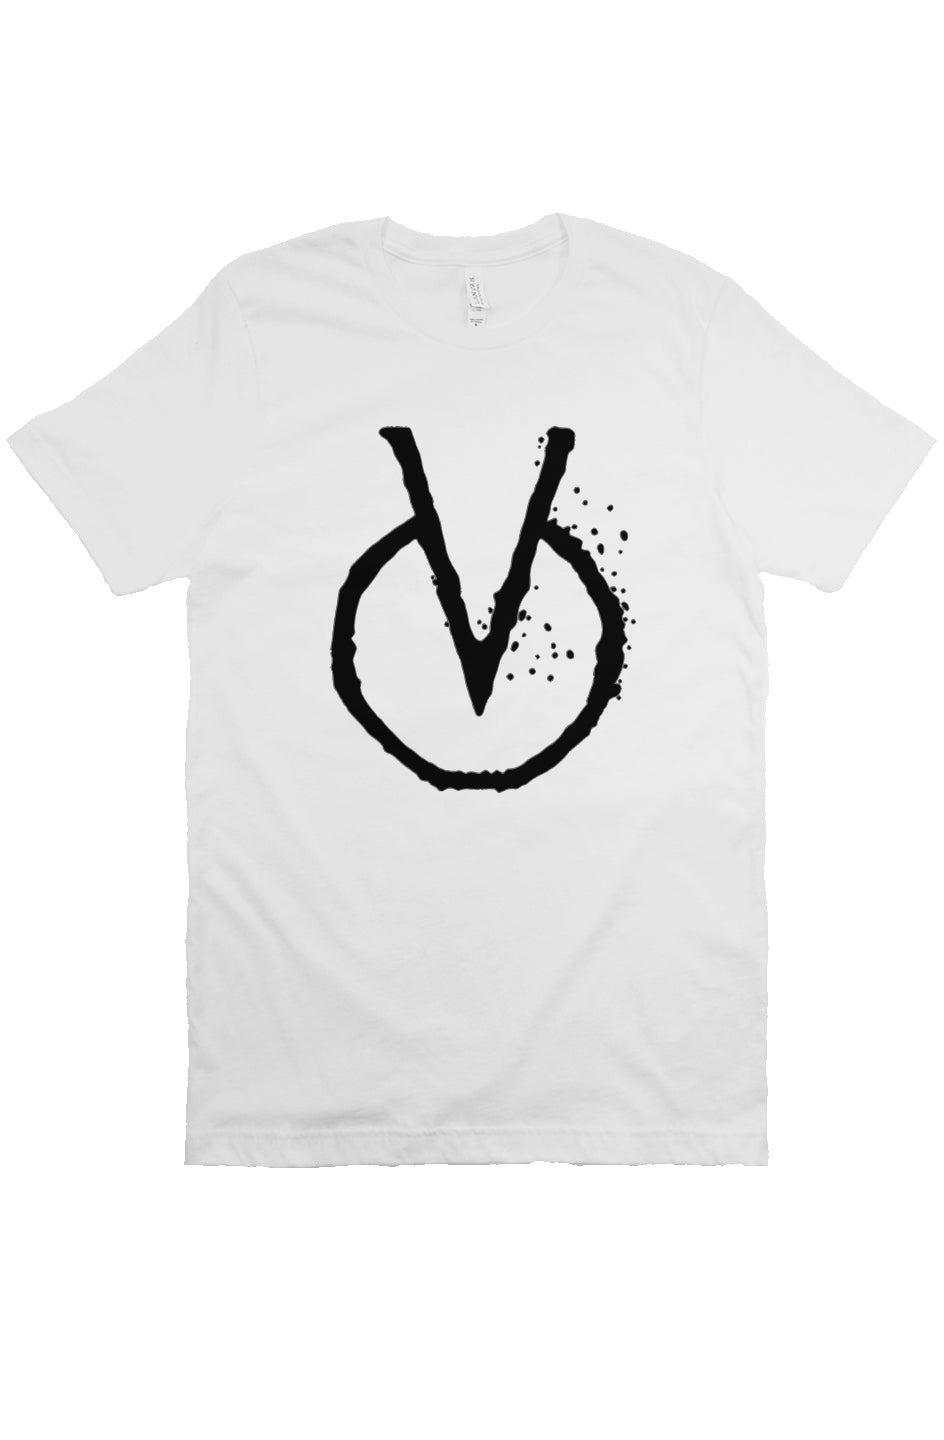 The Velvicks Greatest Hits T-Shirt - Black on White